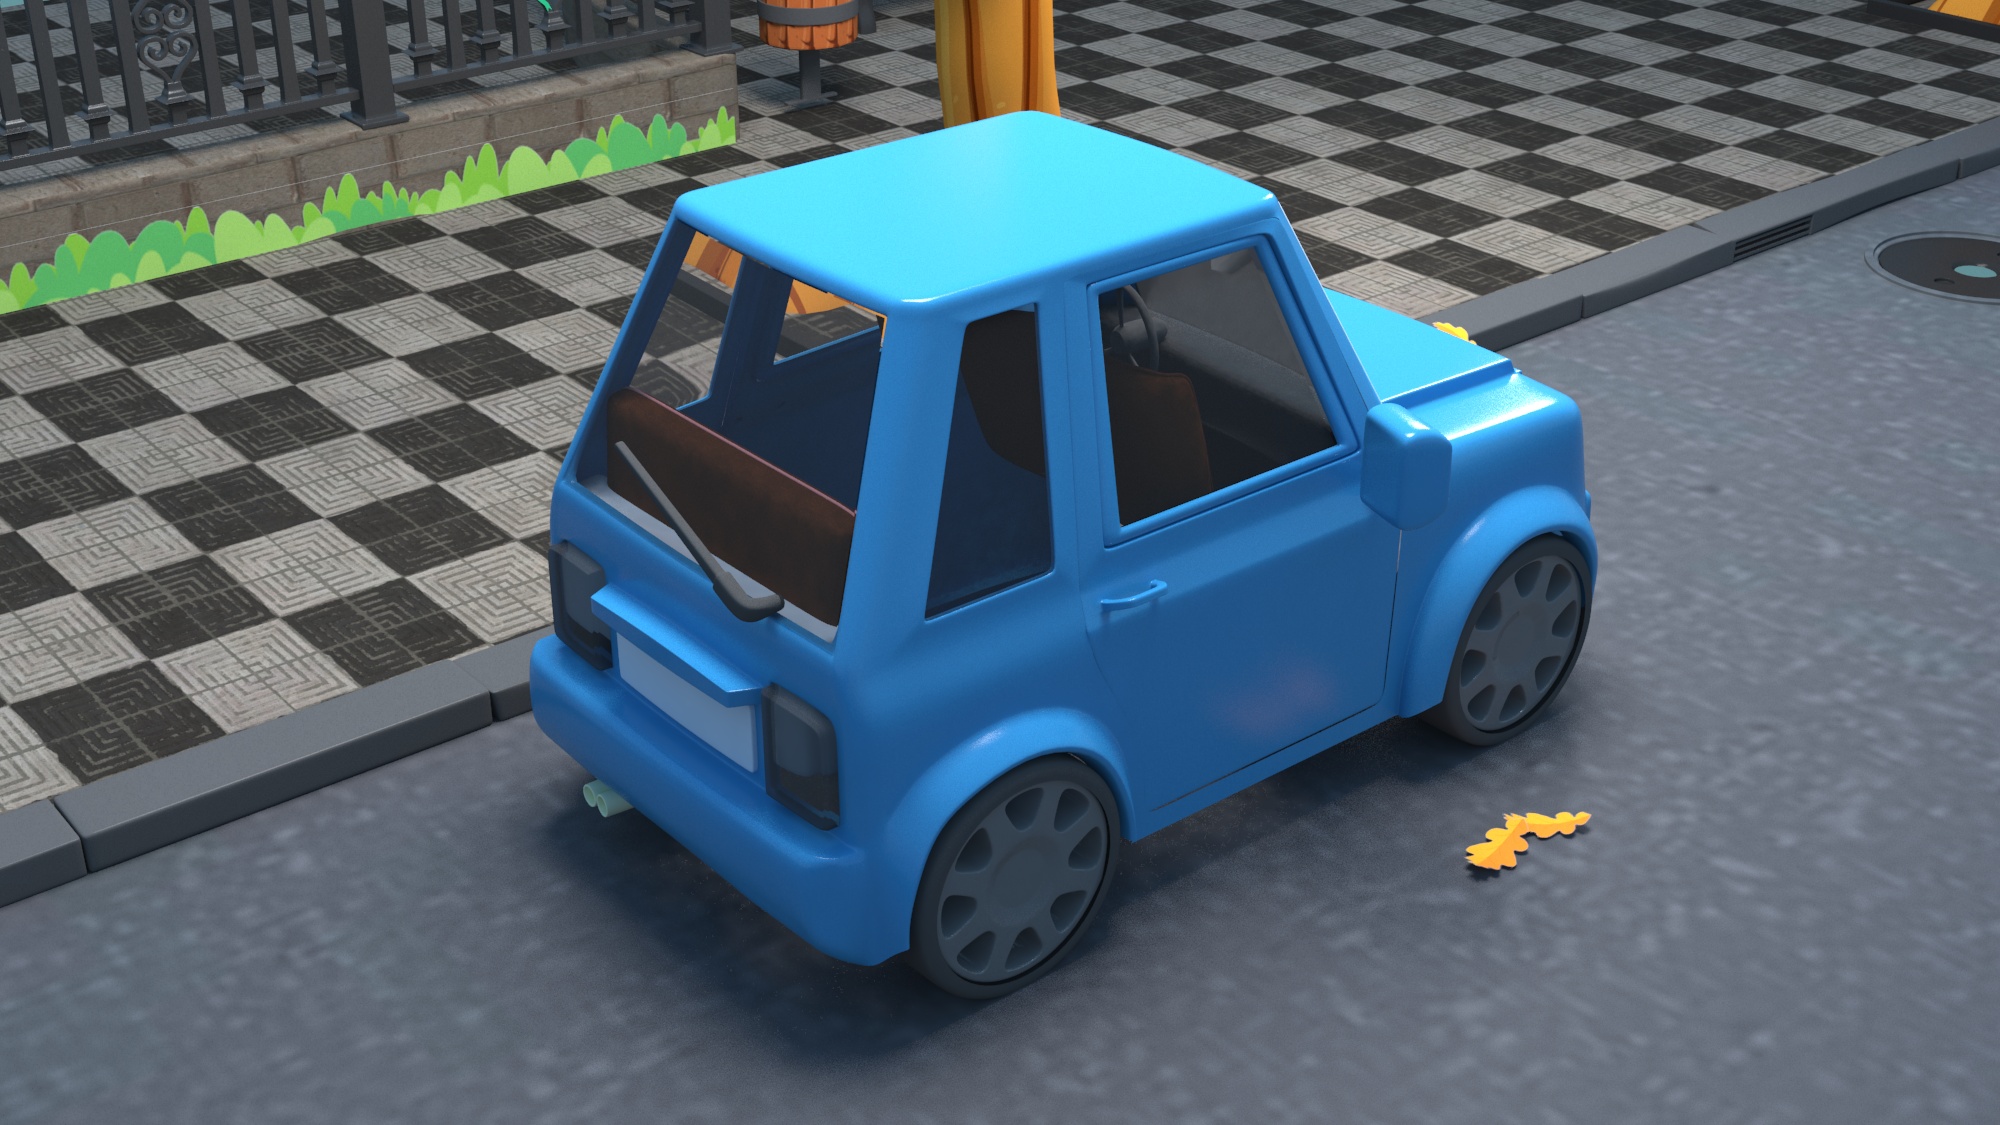 3D car model and rendering